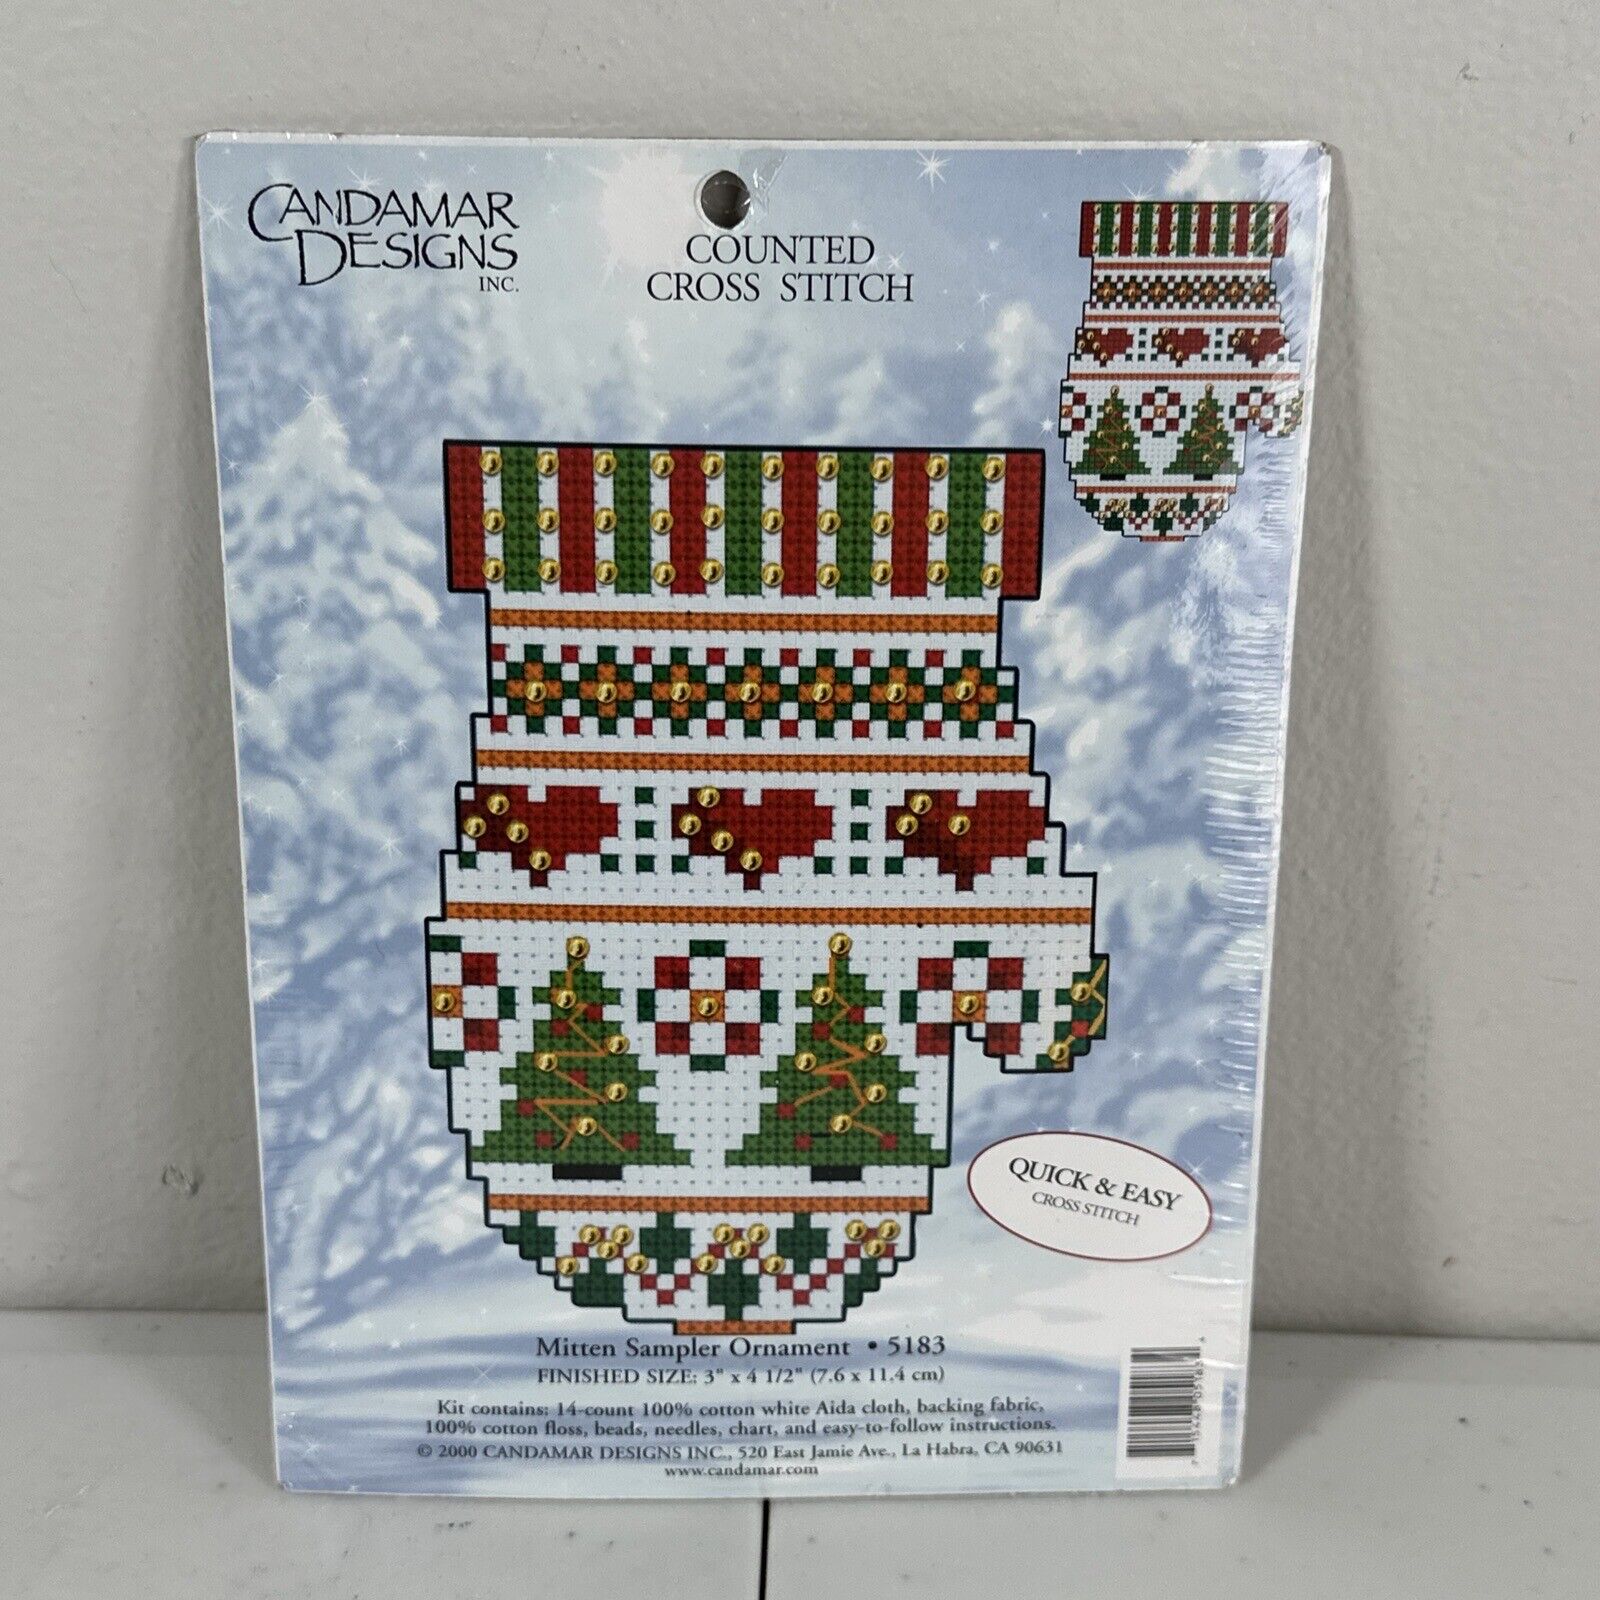 Mitten Sampler Ornament Counted Cross Stitch 5183 Sealed 2000 Candamar Designs 